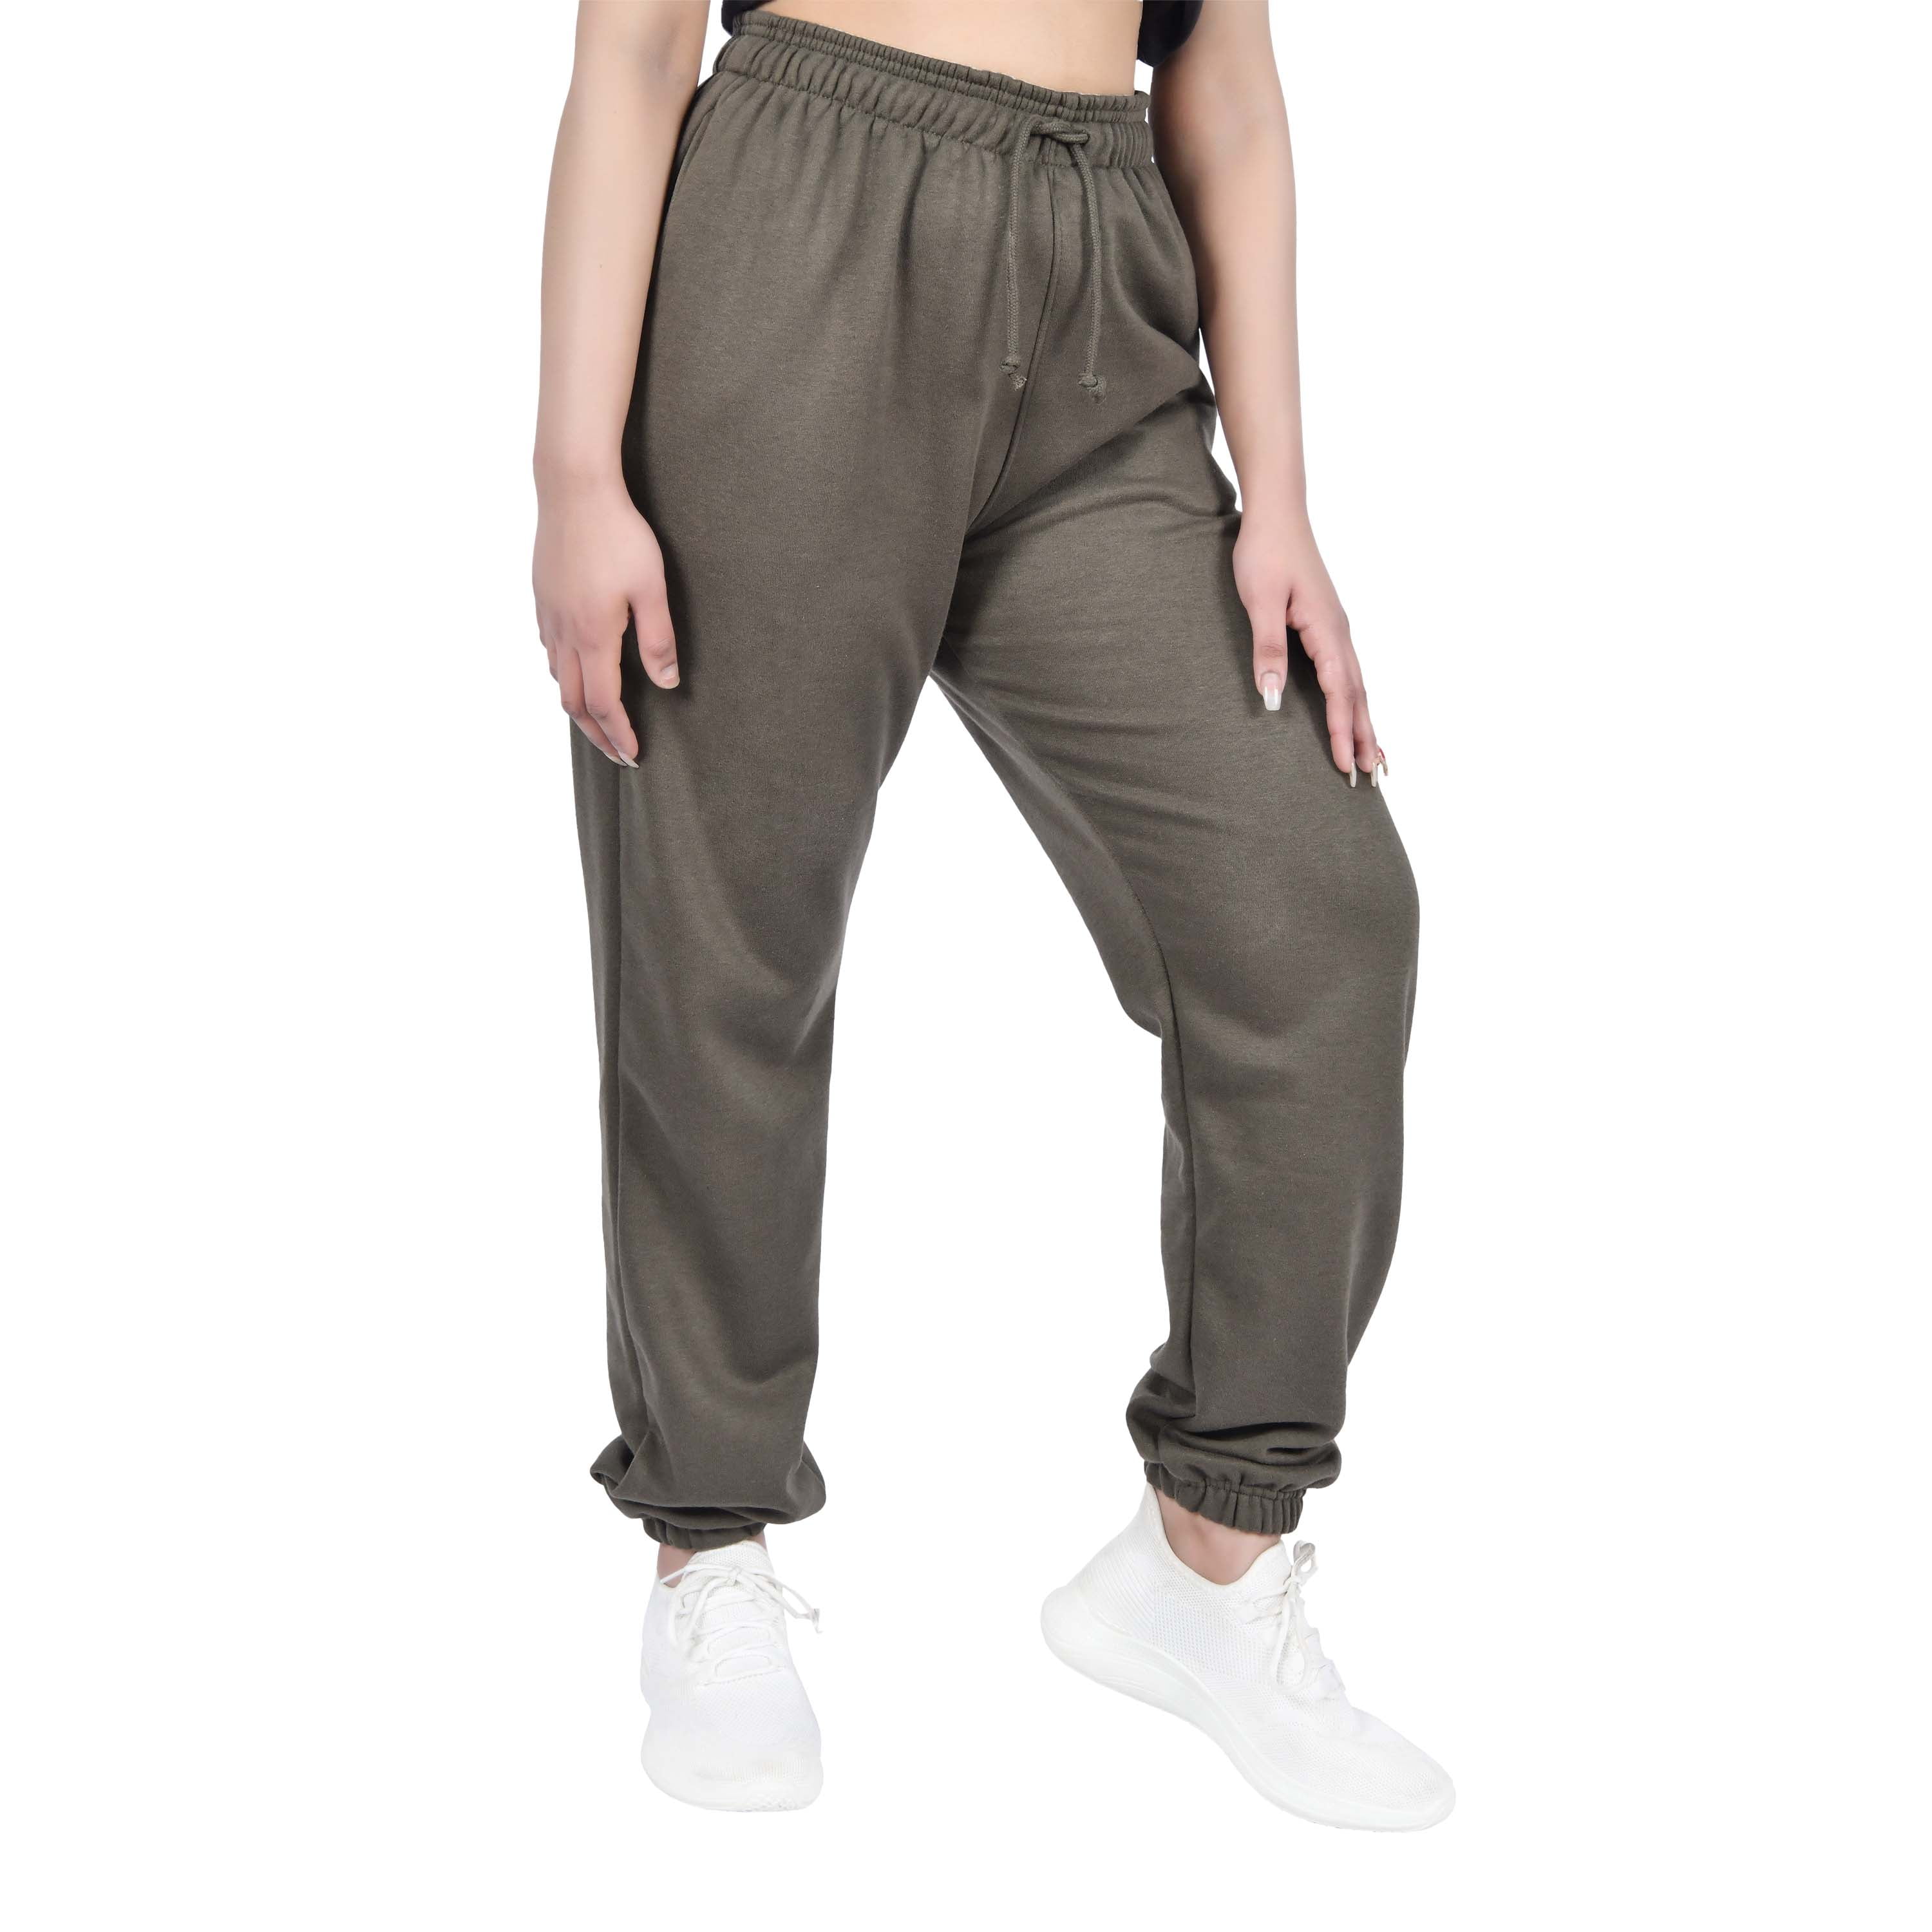 Sleepdown Basic Joggers Pants for Women Casual Fleece Trouser